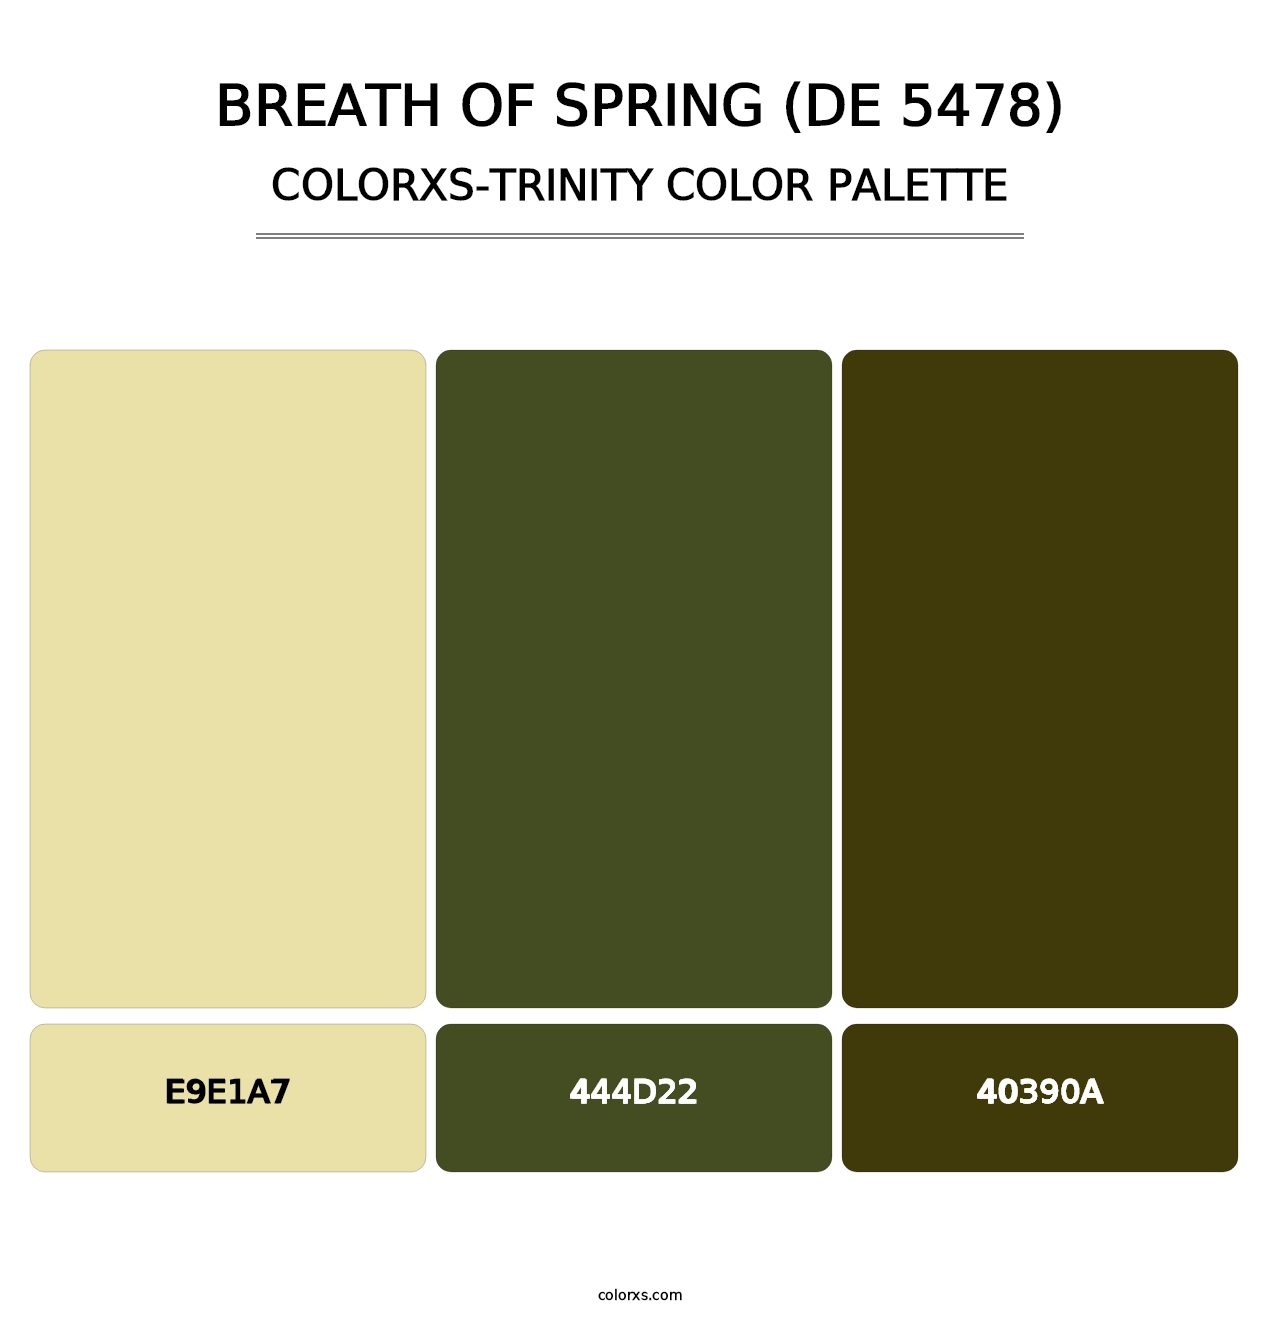 Breath of Spring (DE 5478) - Colorxs Trinity Palette